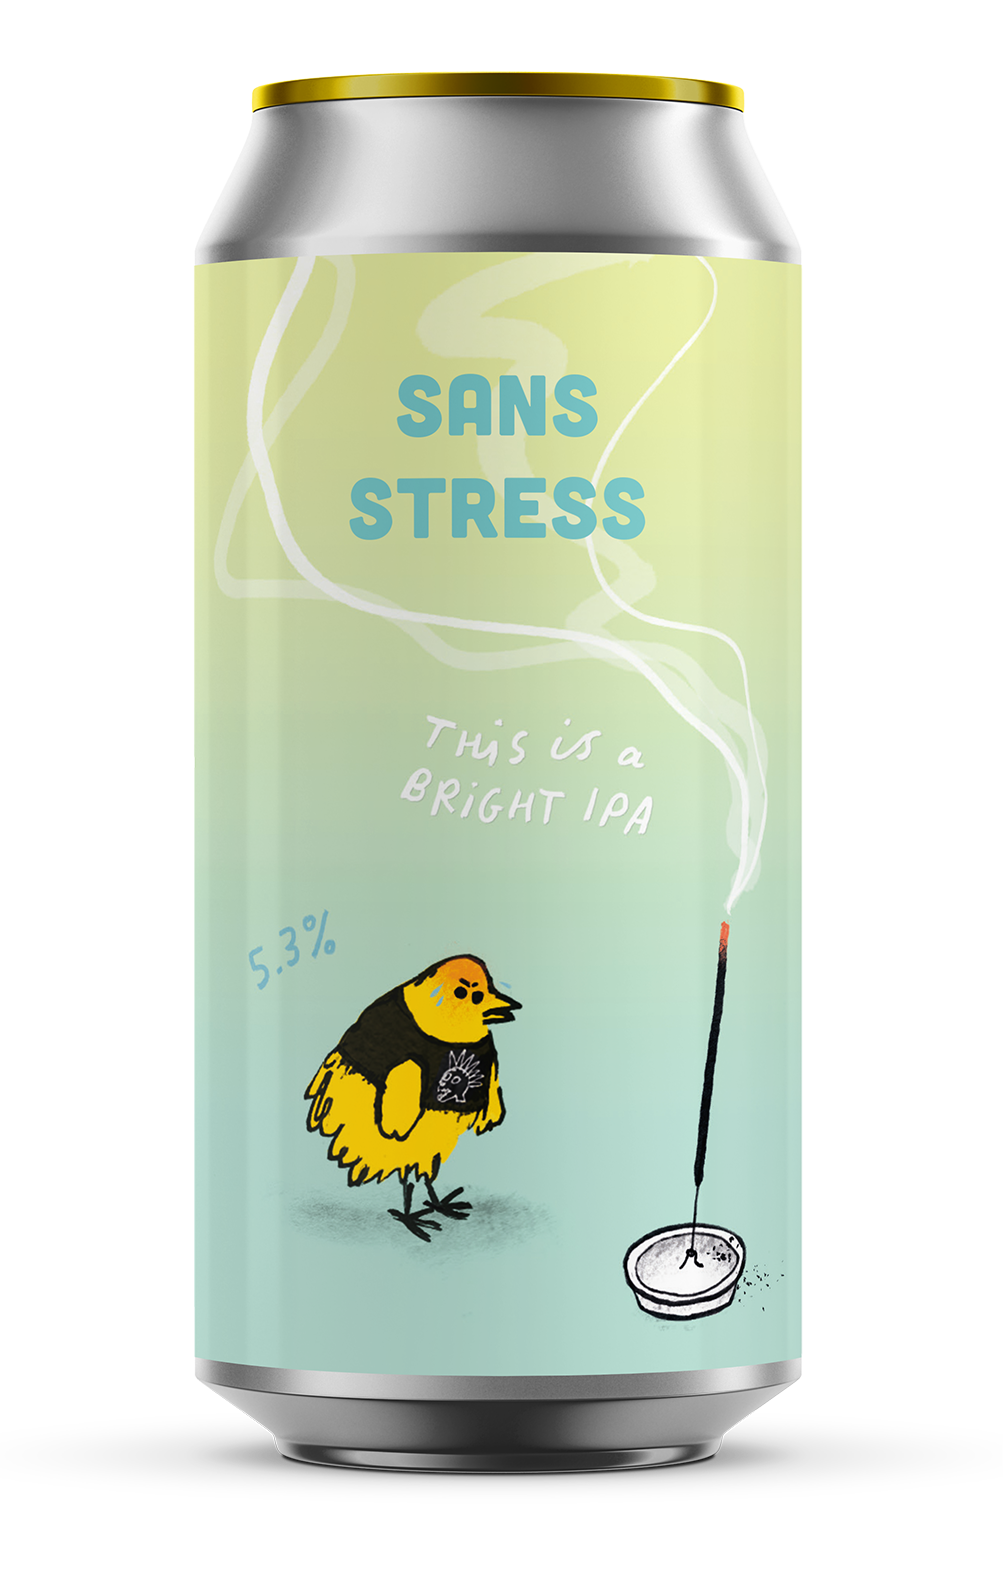 Sans Stress - Bright IPA 5.3%